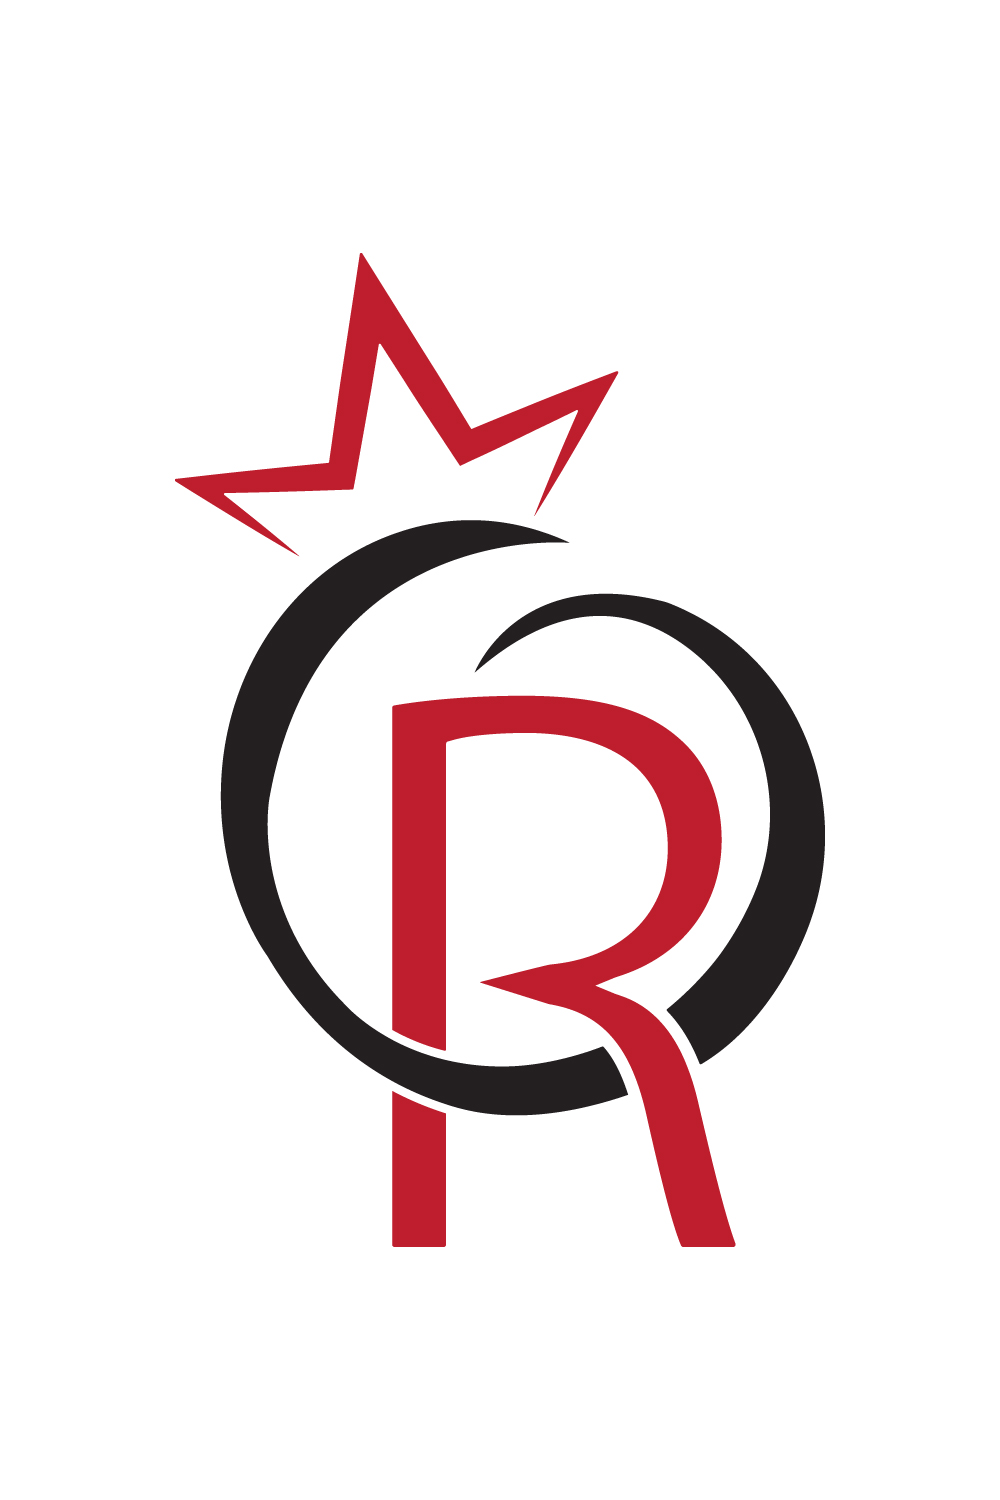 Luxury R Crown logo design R letters logo design R logo iconic design pinterest preview image.